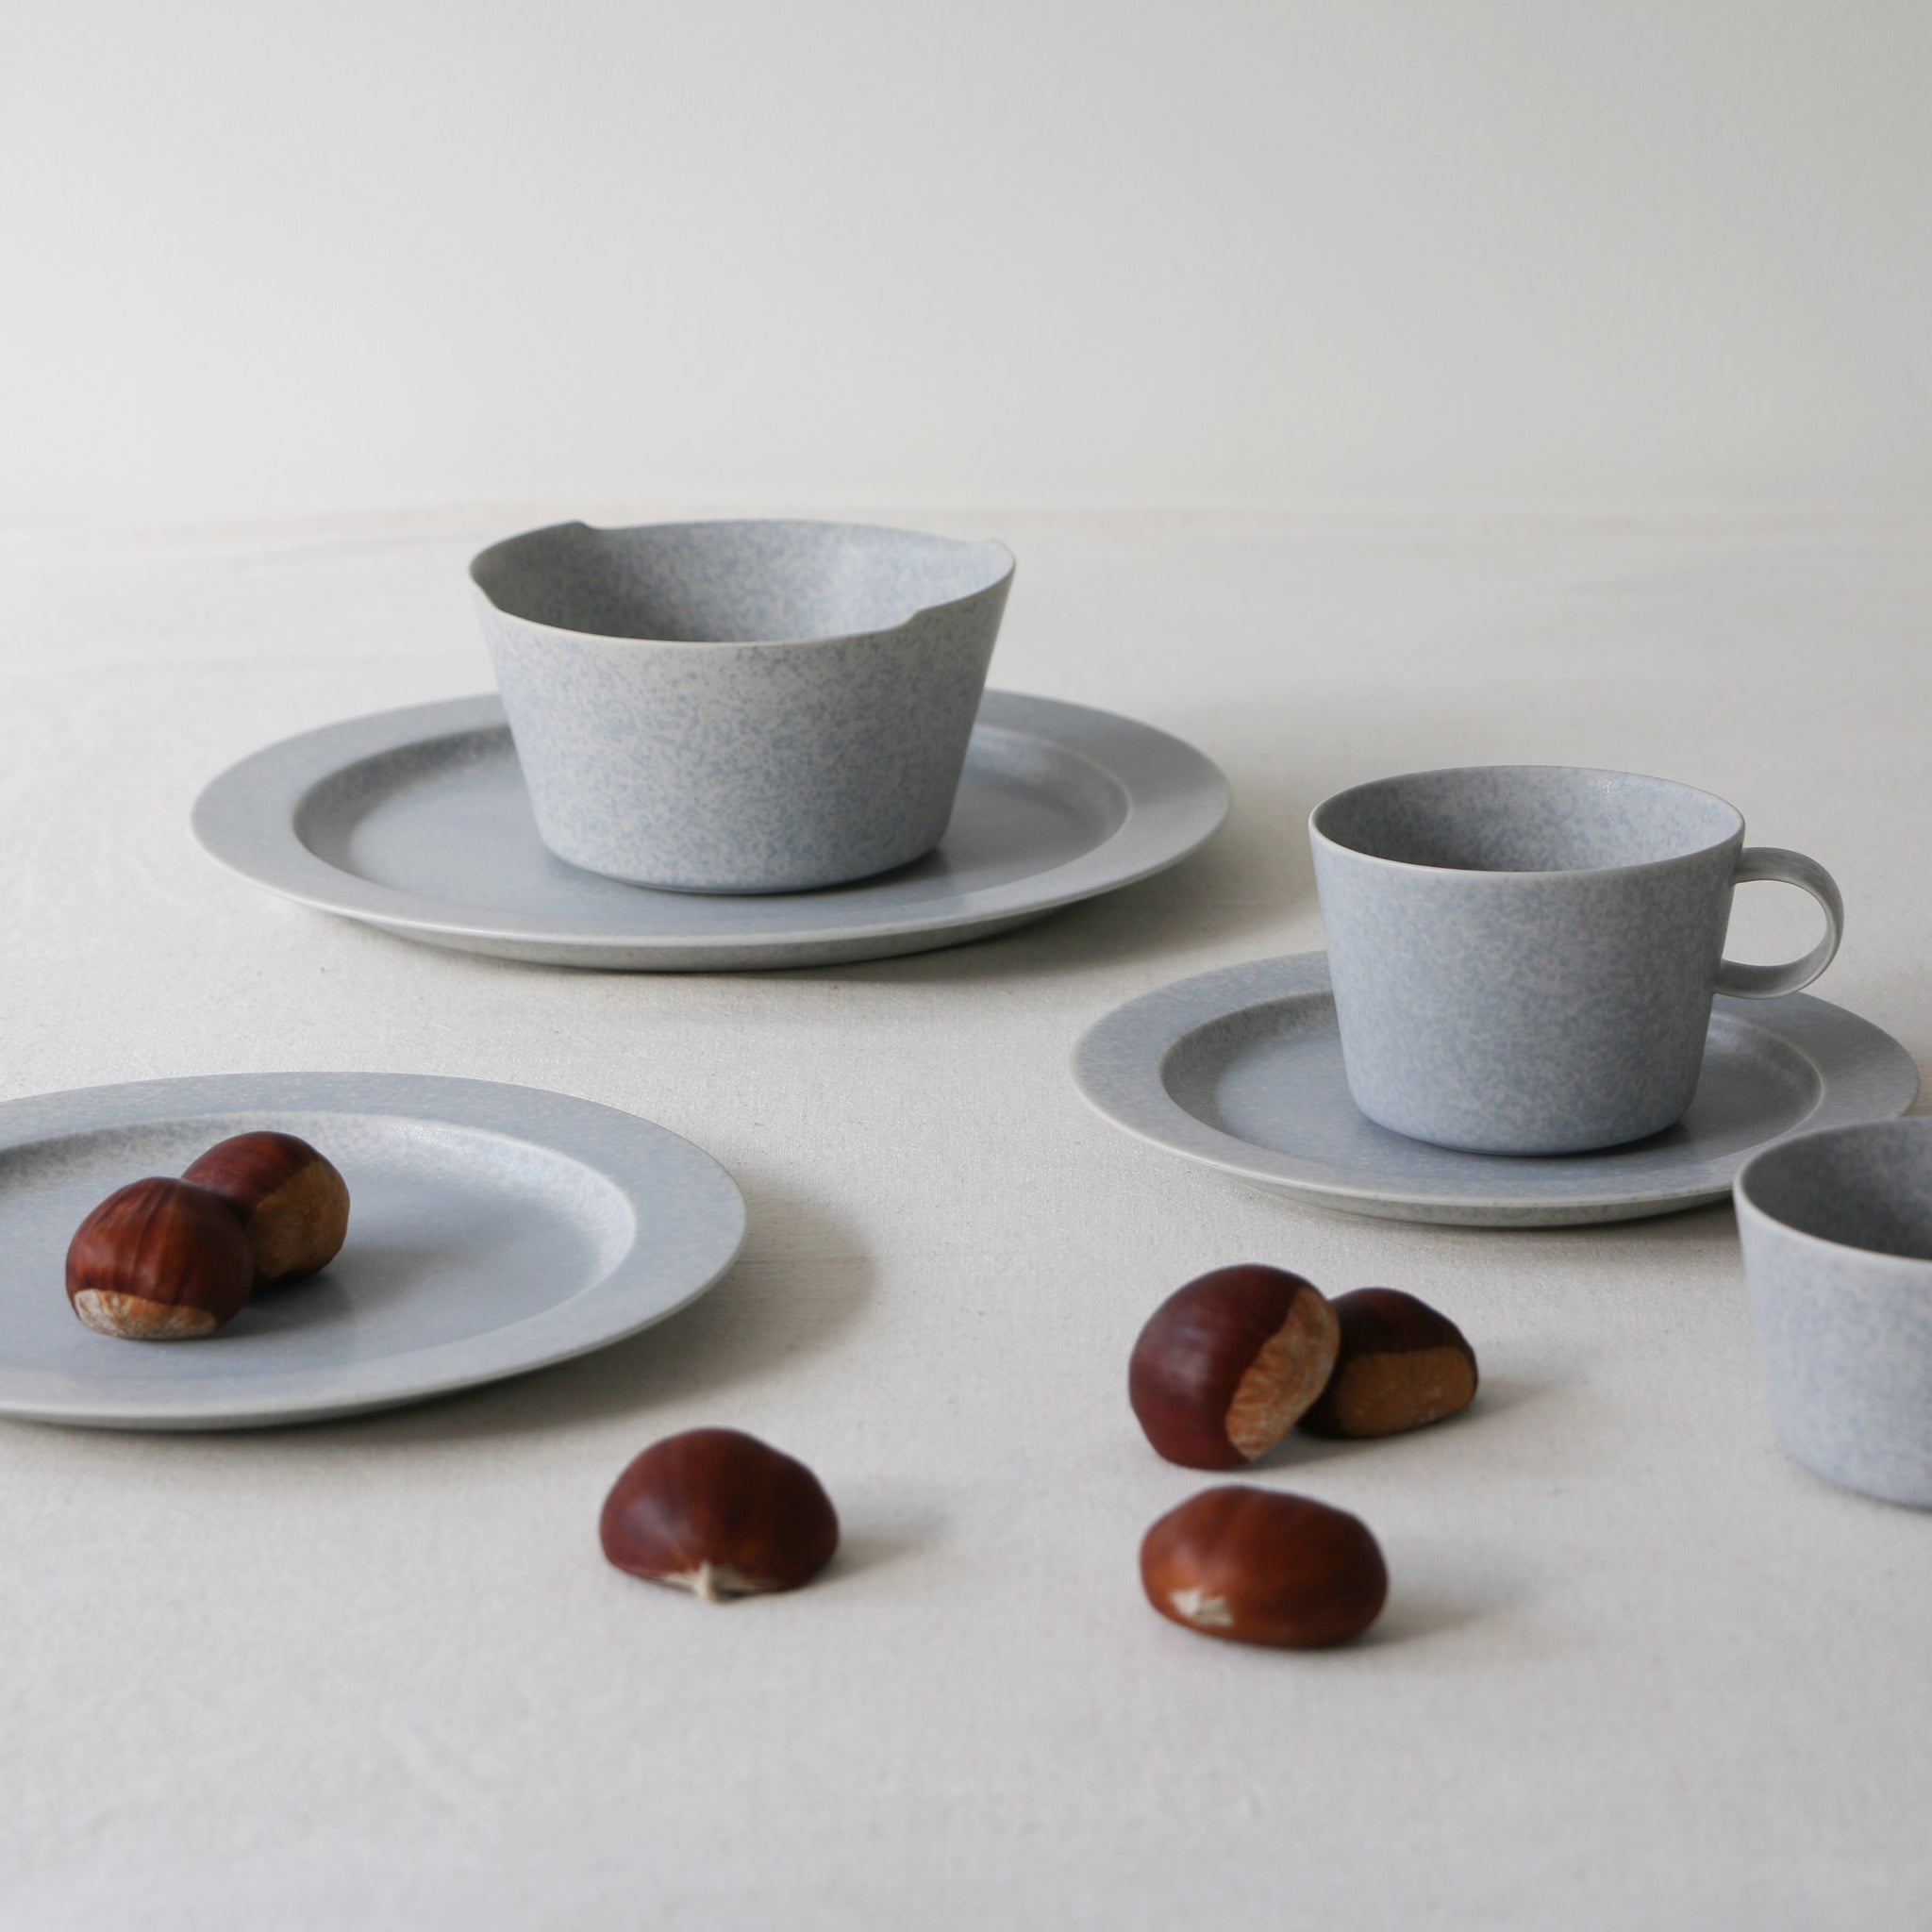 Yumiko iihoshi porcelain UNJOUR Bowl